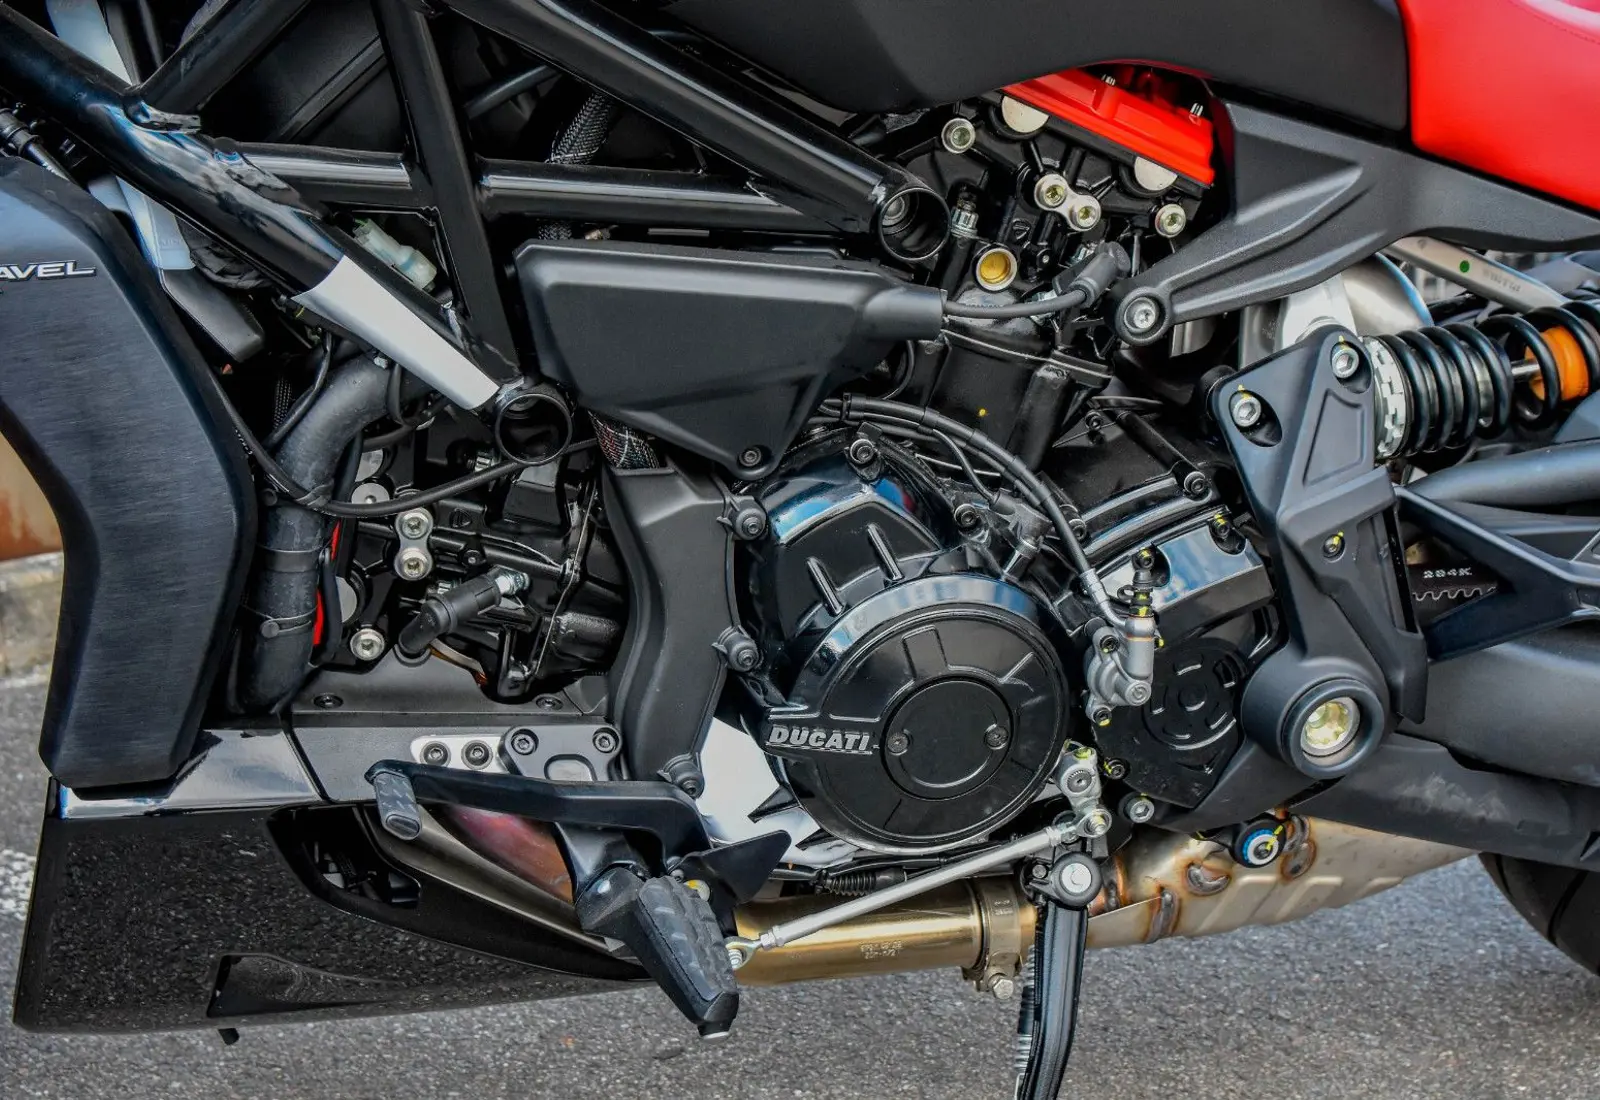 Ducati X-Diavel Nera * POLTRONA FRAU * 1 OF 500 * LIMITED ED - 44742